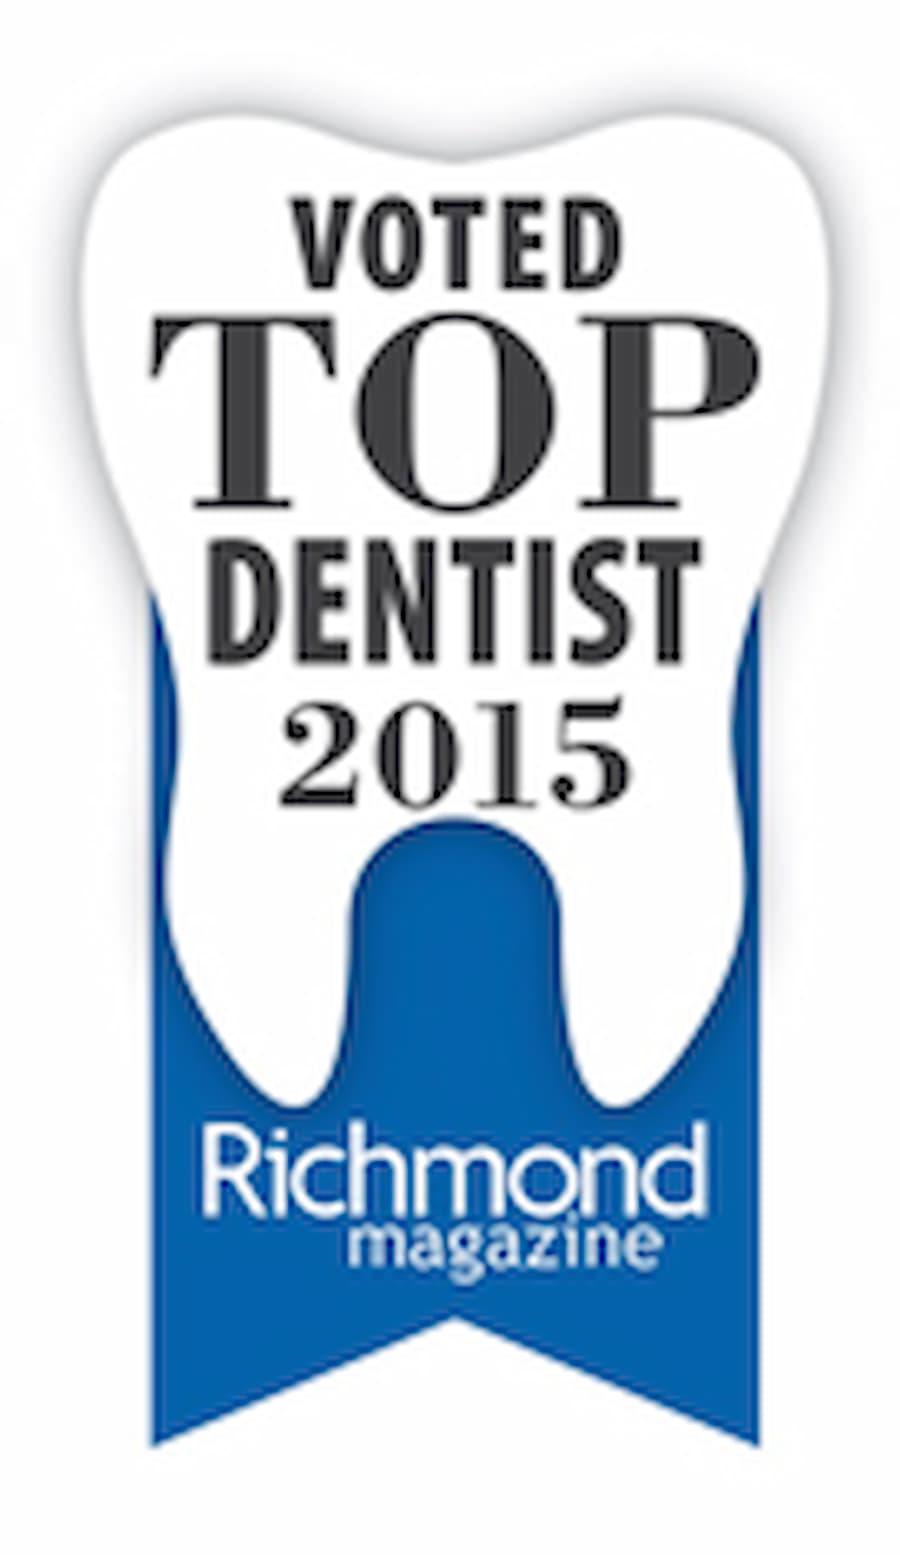 Top Dentist 2015